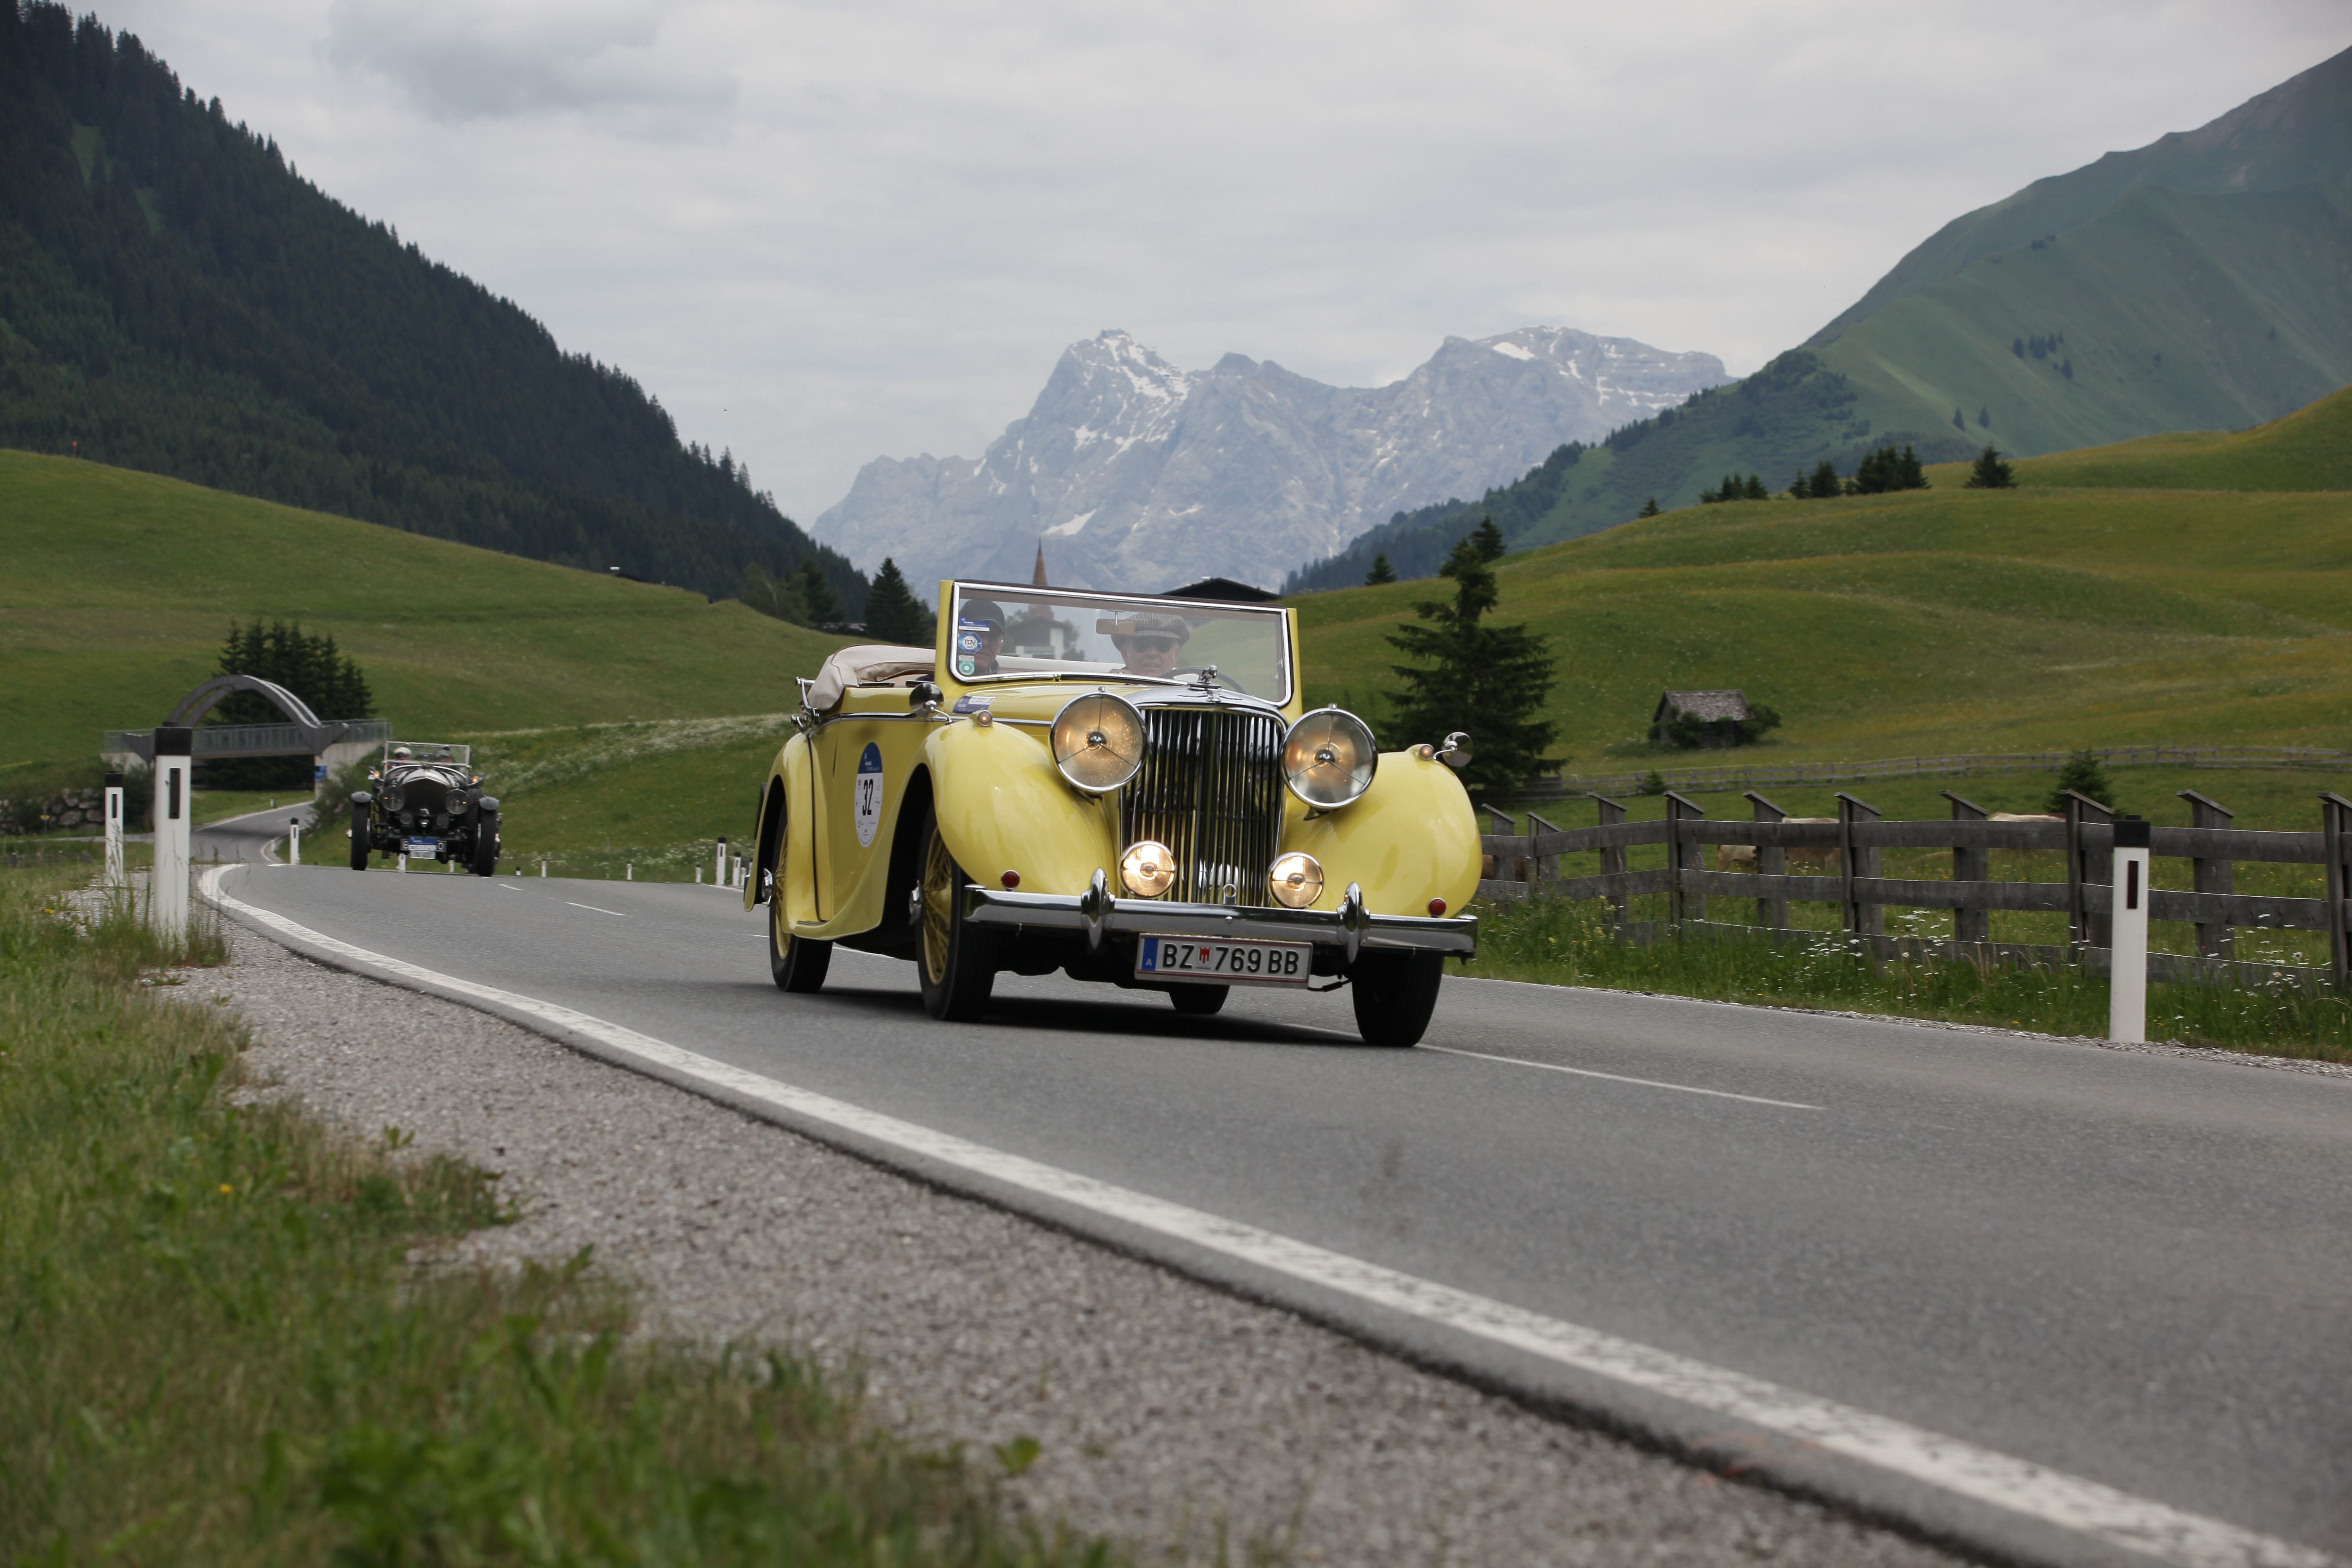 Arlberg Classic Car Rallye 2014